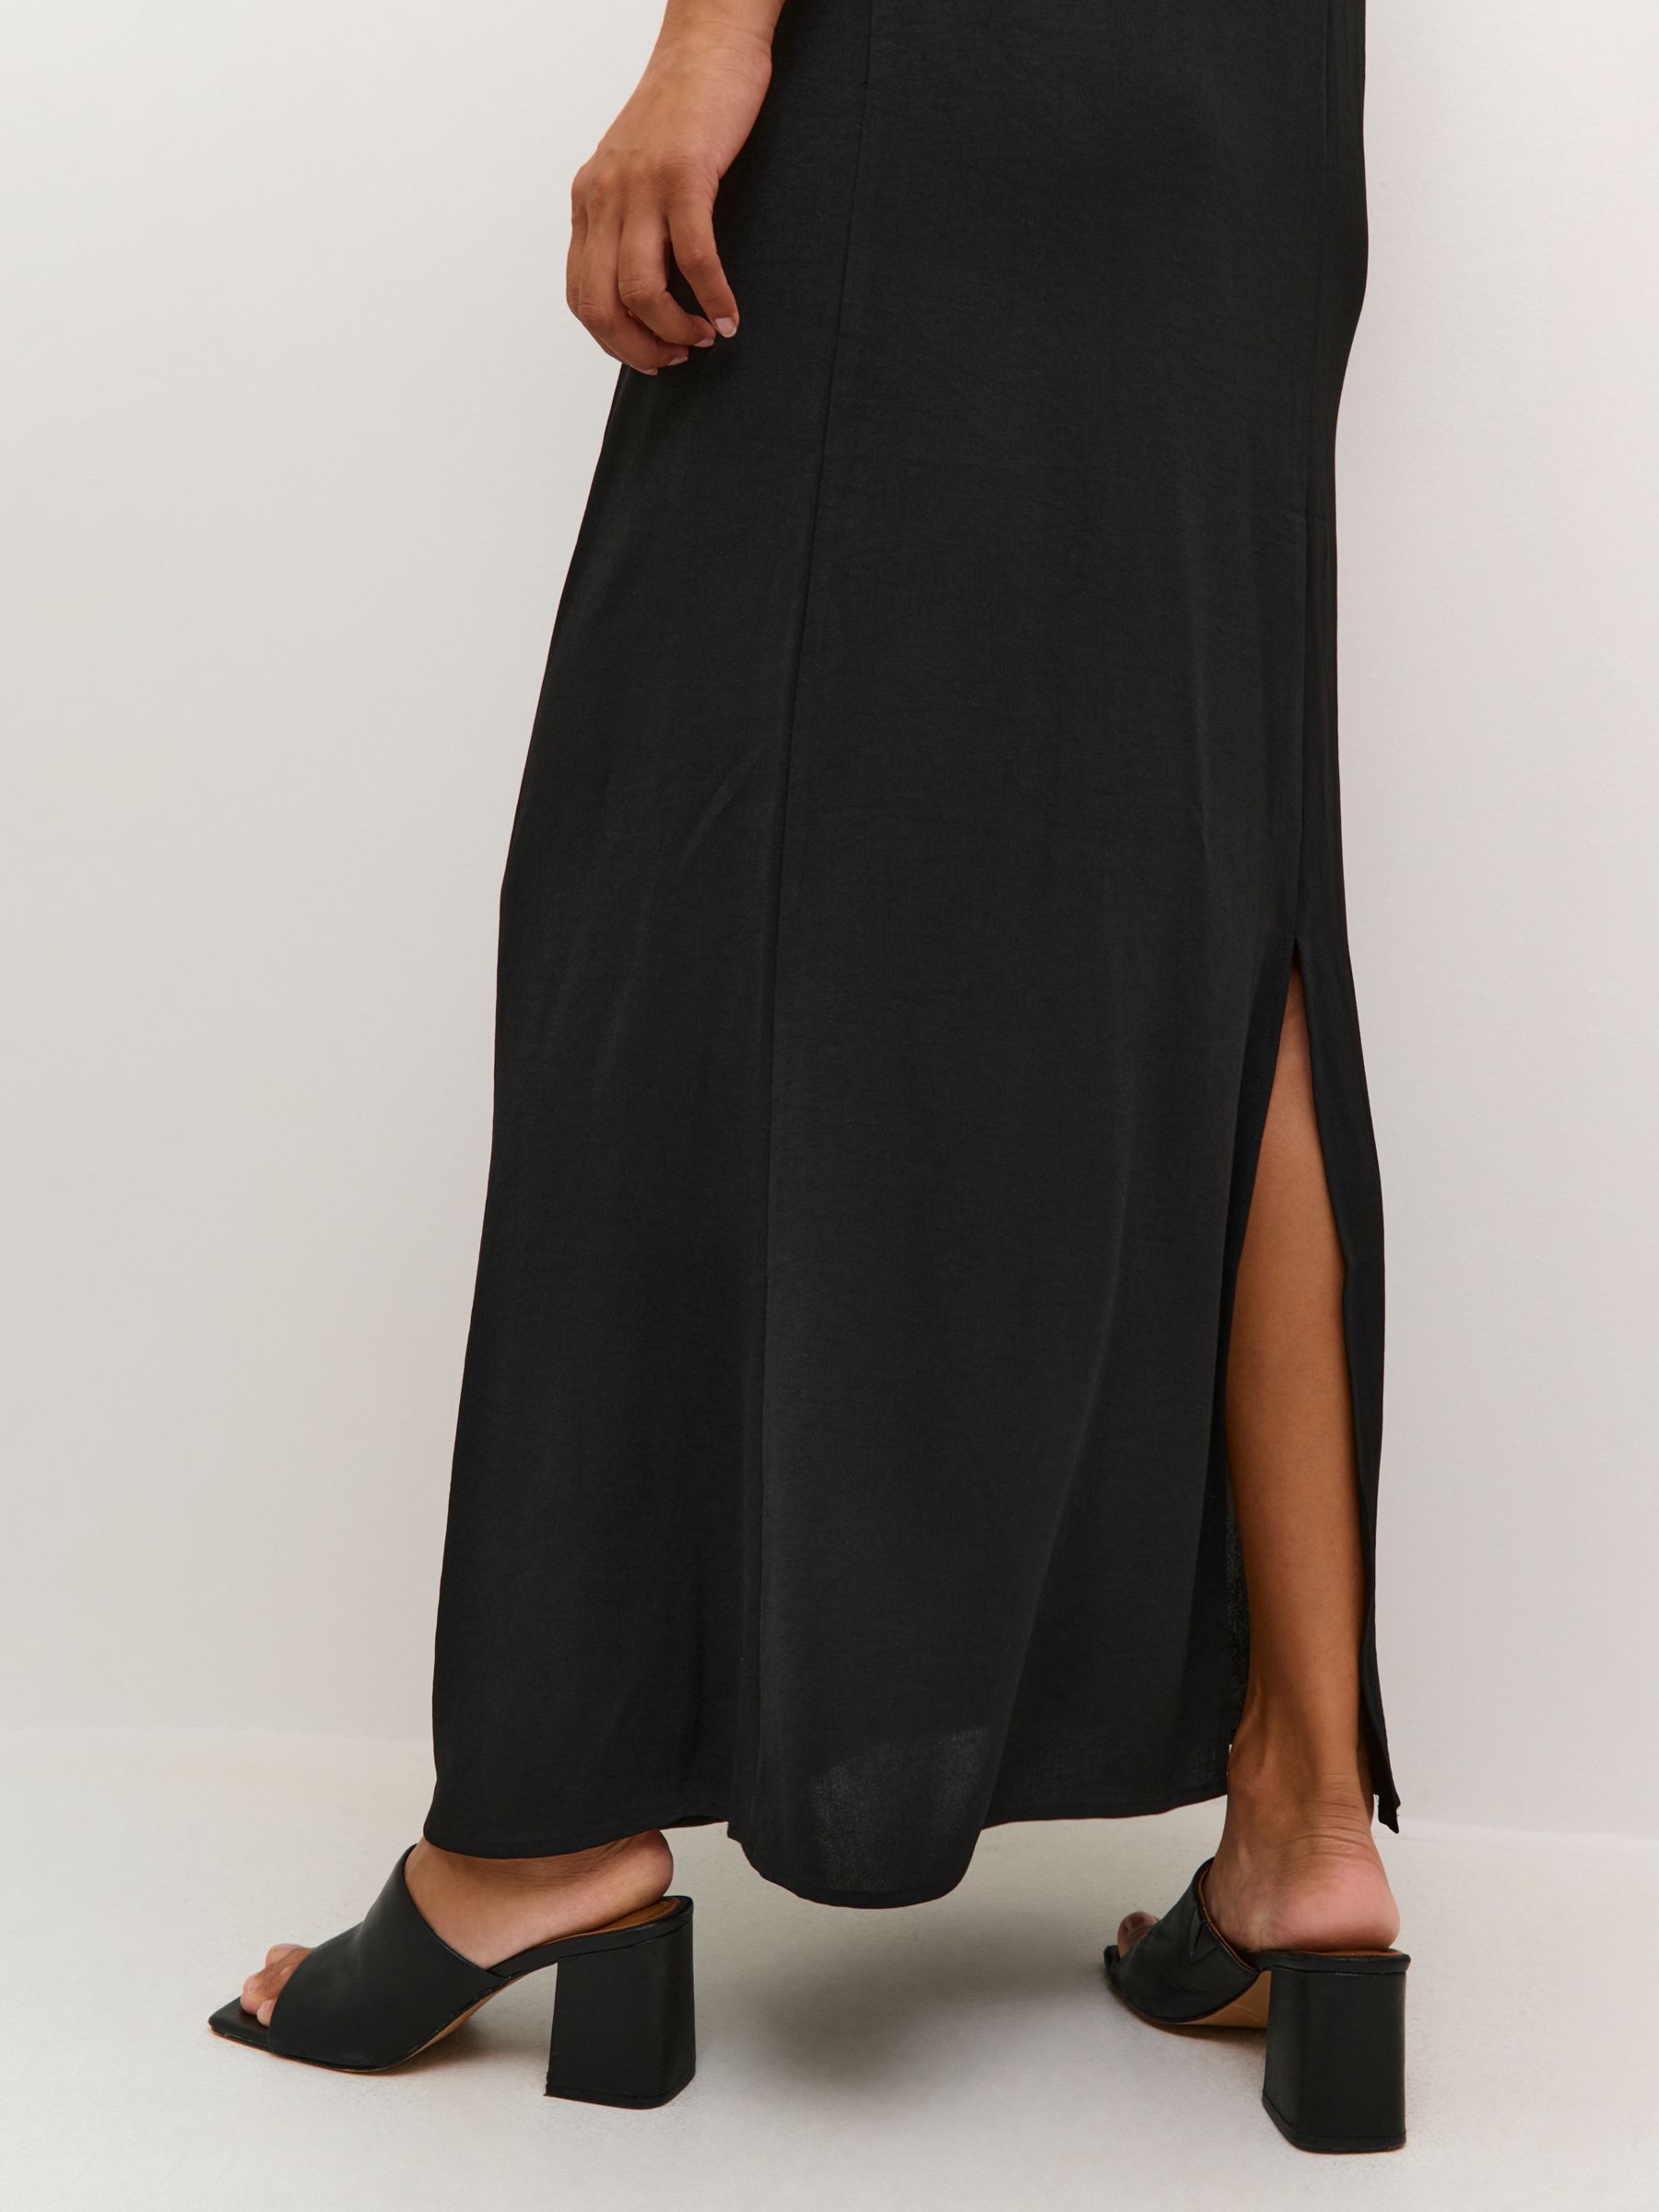 KAFFE Silja V-Neck Sleeveless Maxi Dress, Deep Black, 8